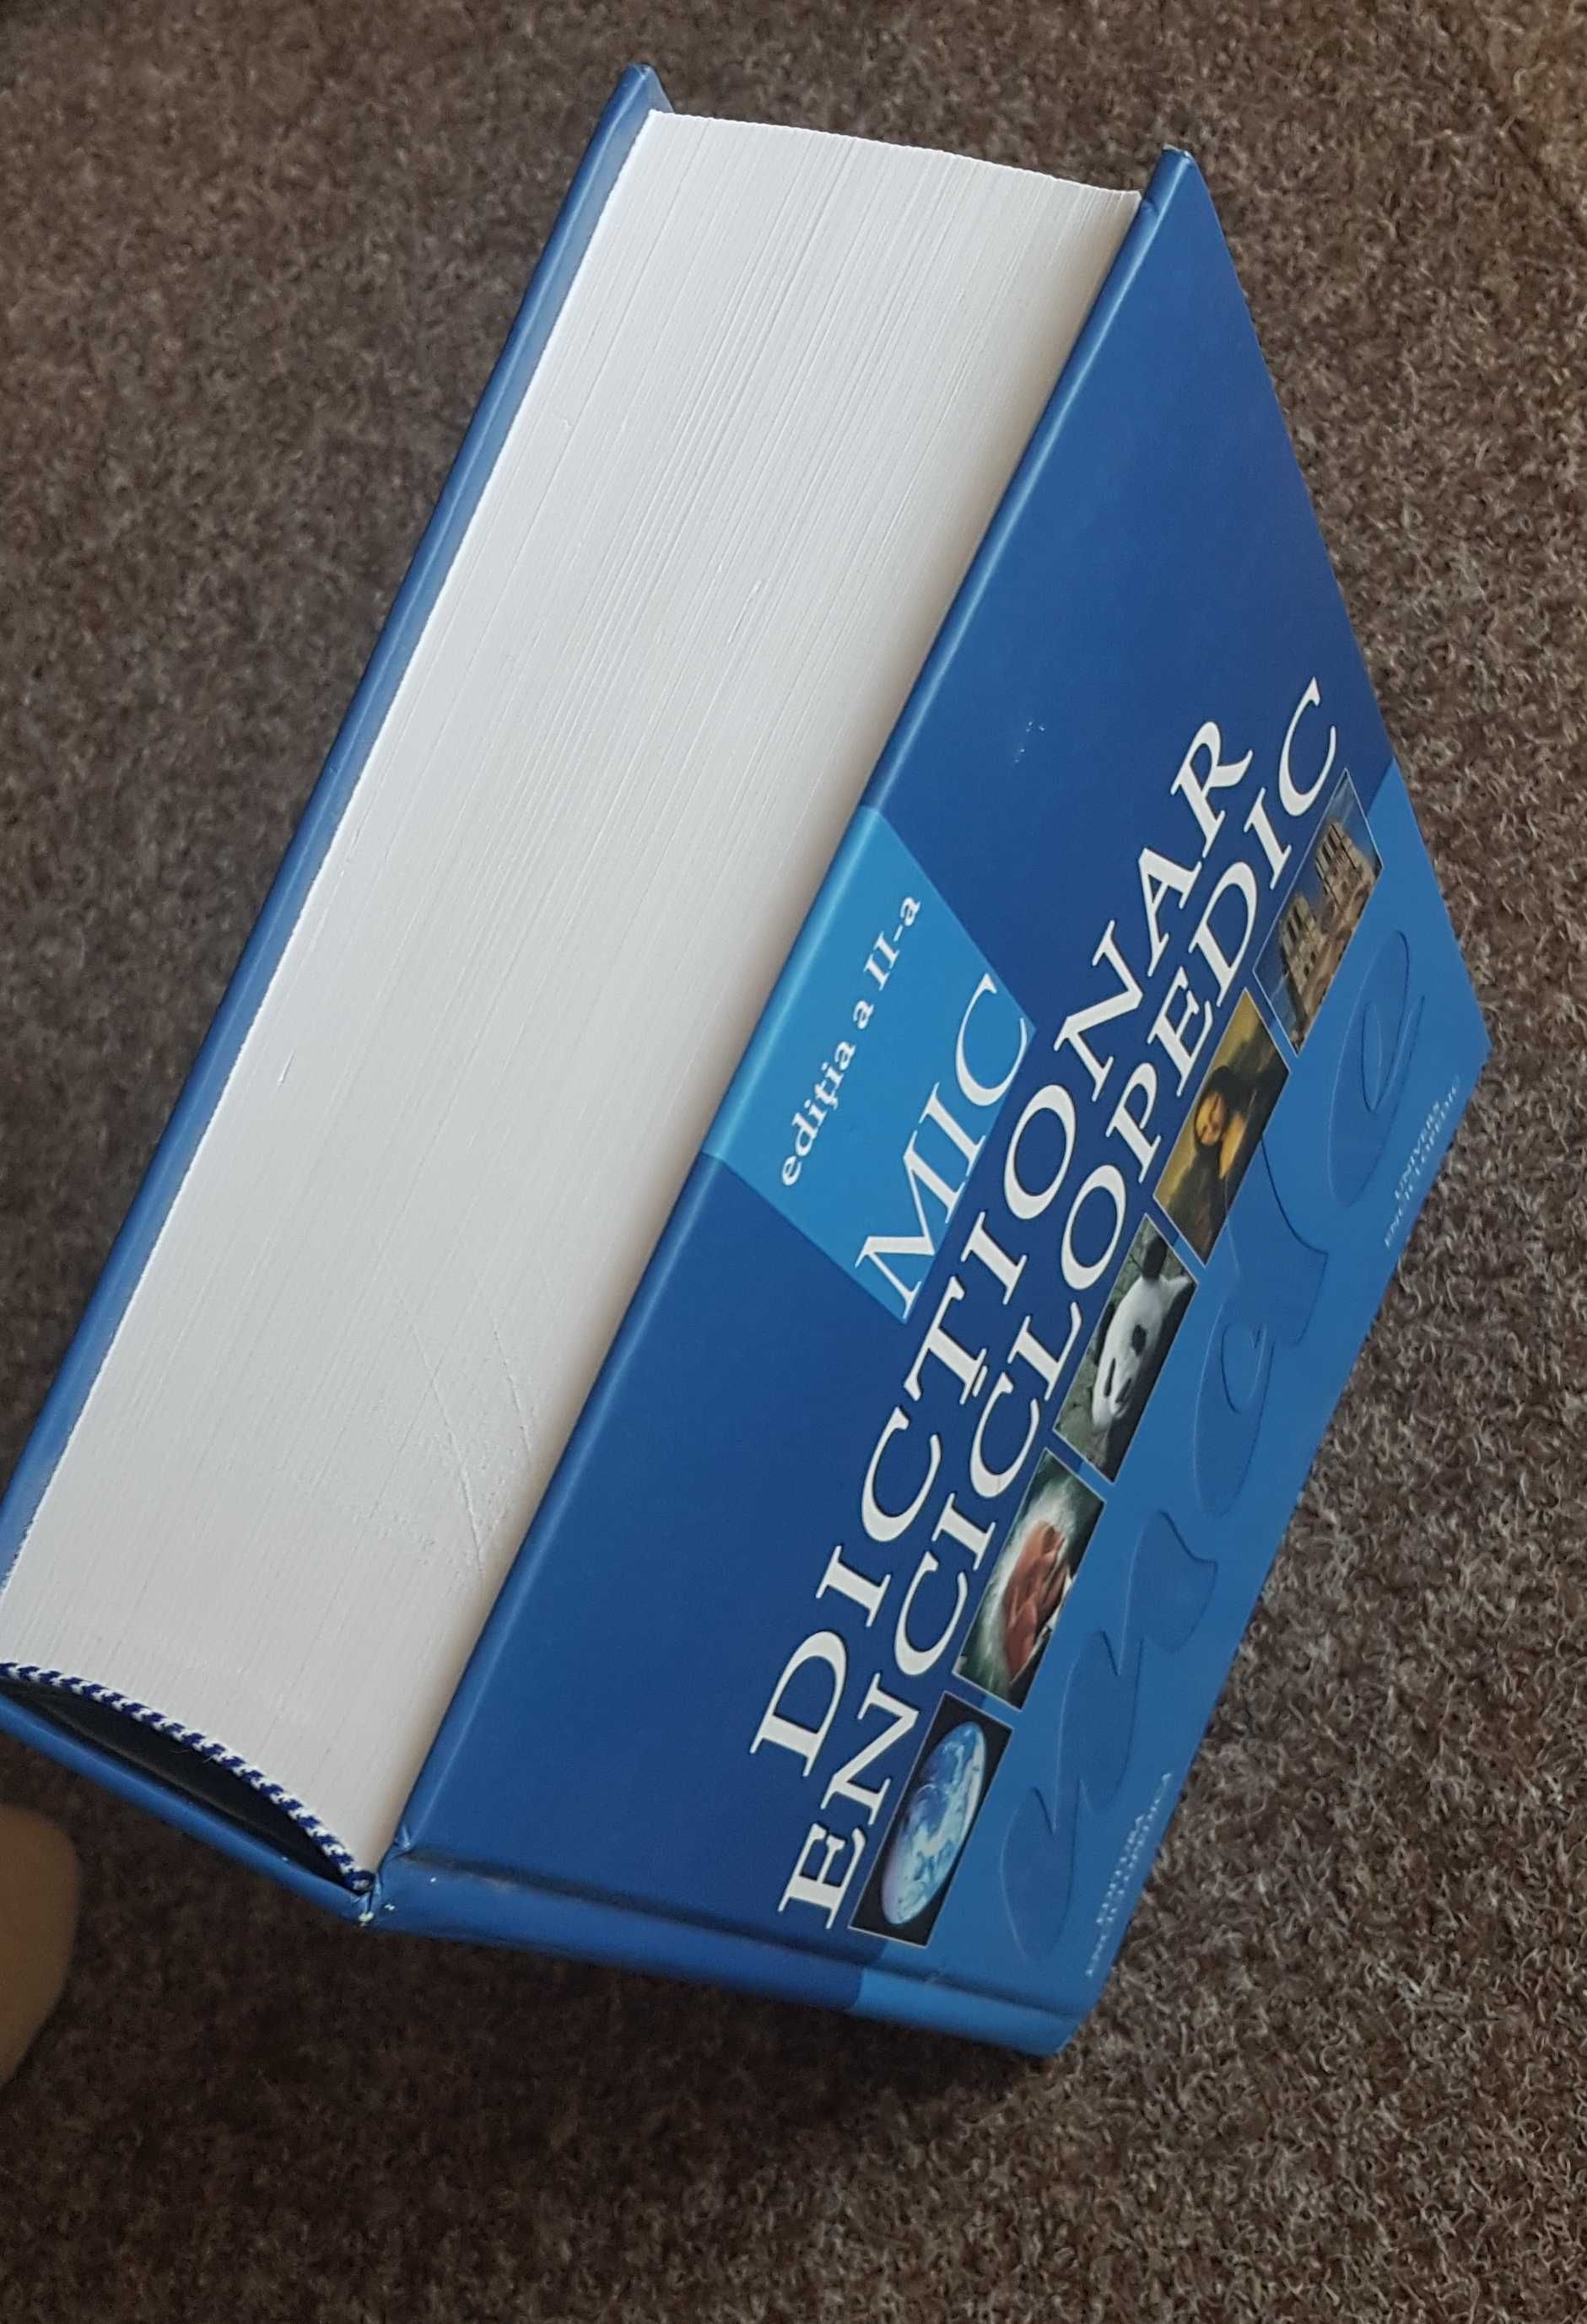 Vand dictionar enciclopedic (1500 pagini) - absolut nou